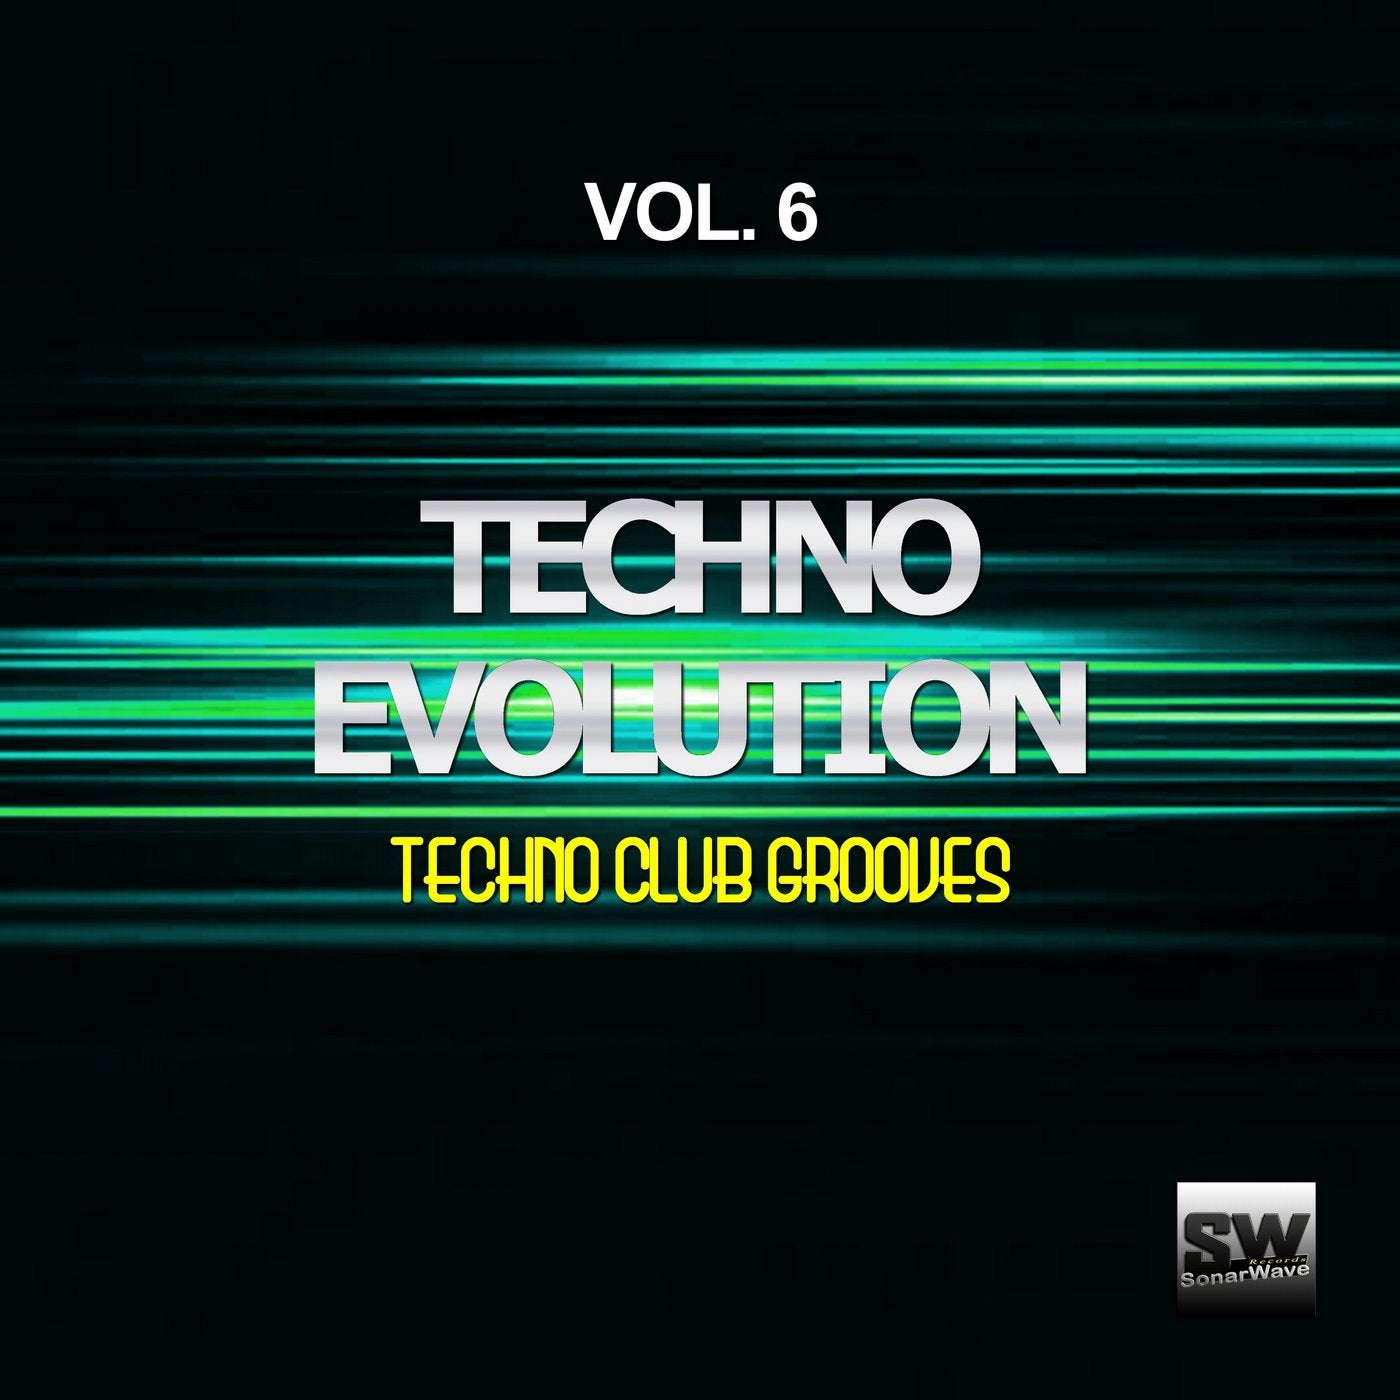 Techno Evolution, Vol. 6 (Techno Club Grooves)